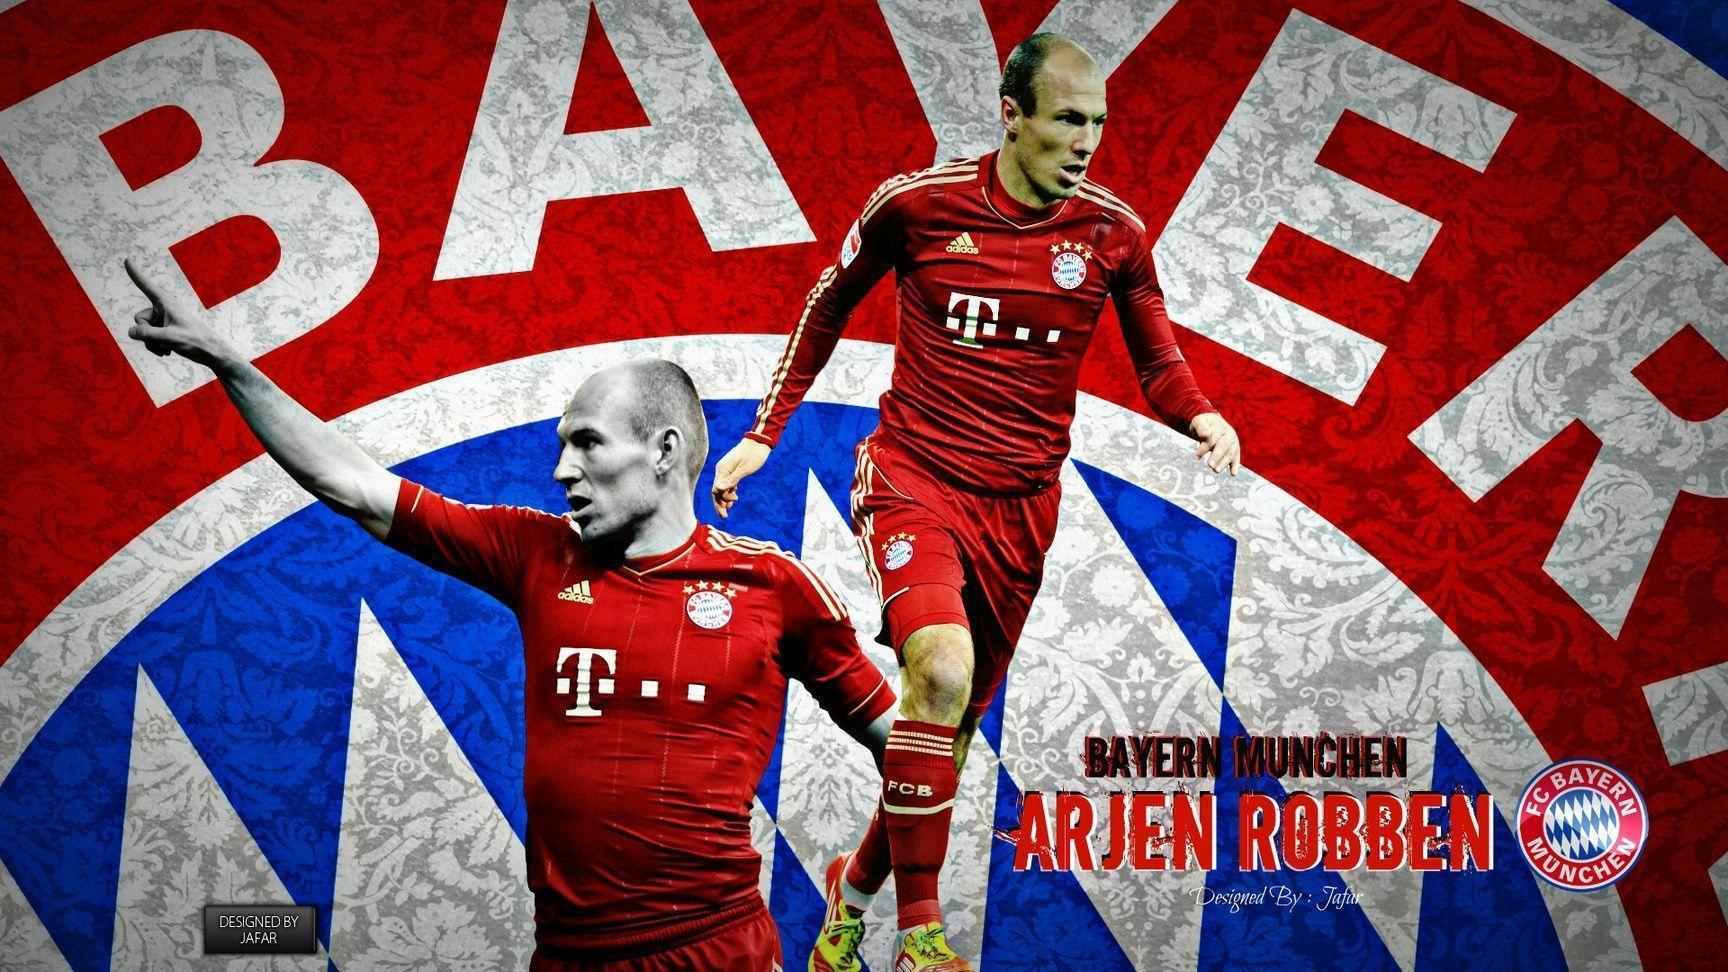 Hd Wallpaper Arjen Robben Bayern Munich 1366 X 768 959 Kb Jpeg